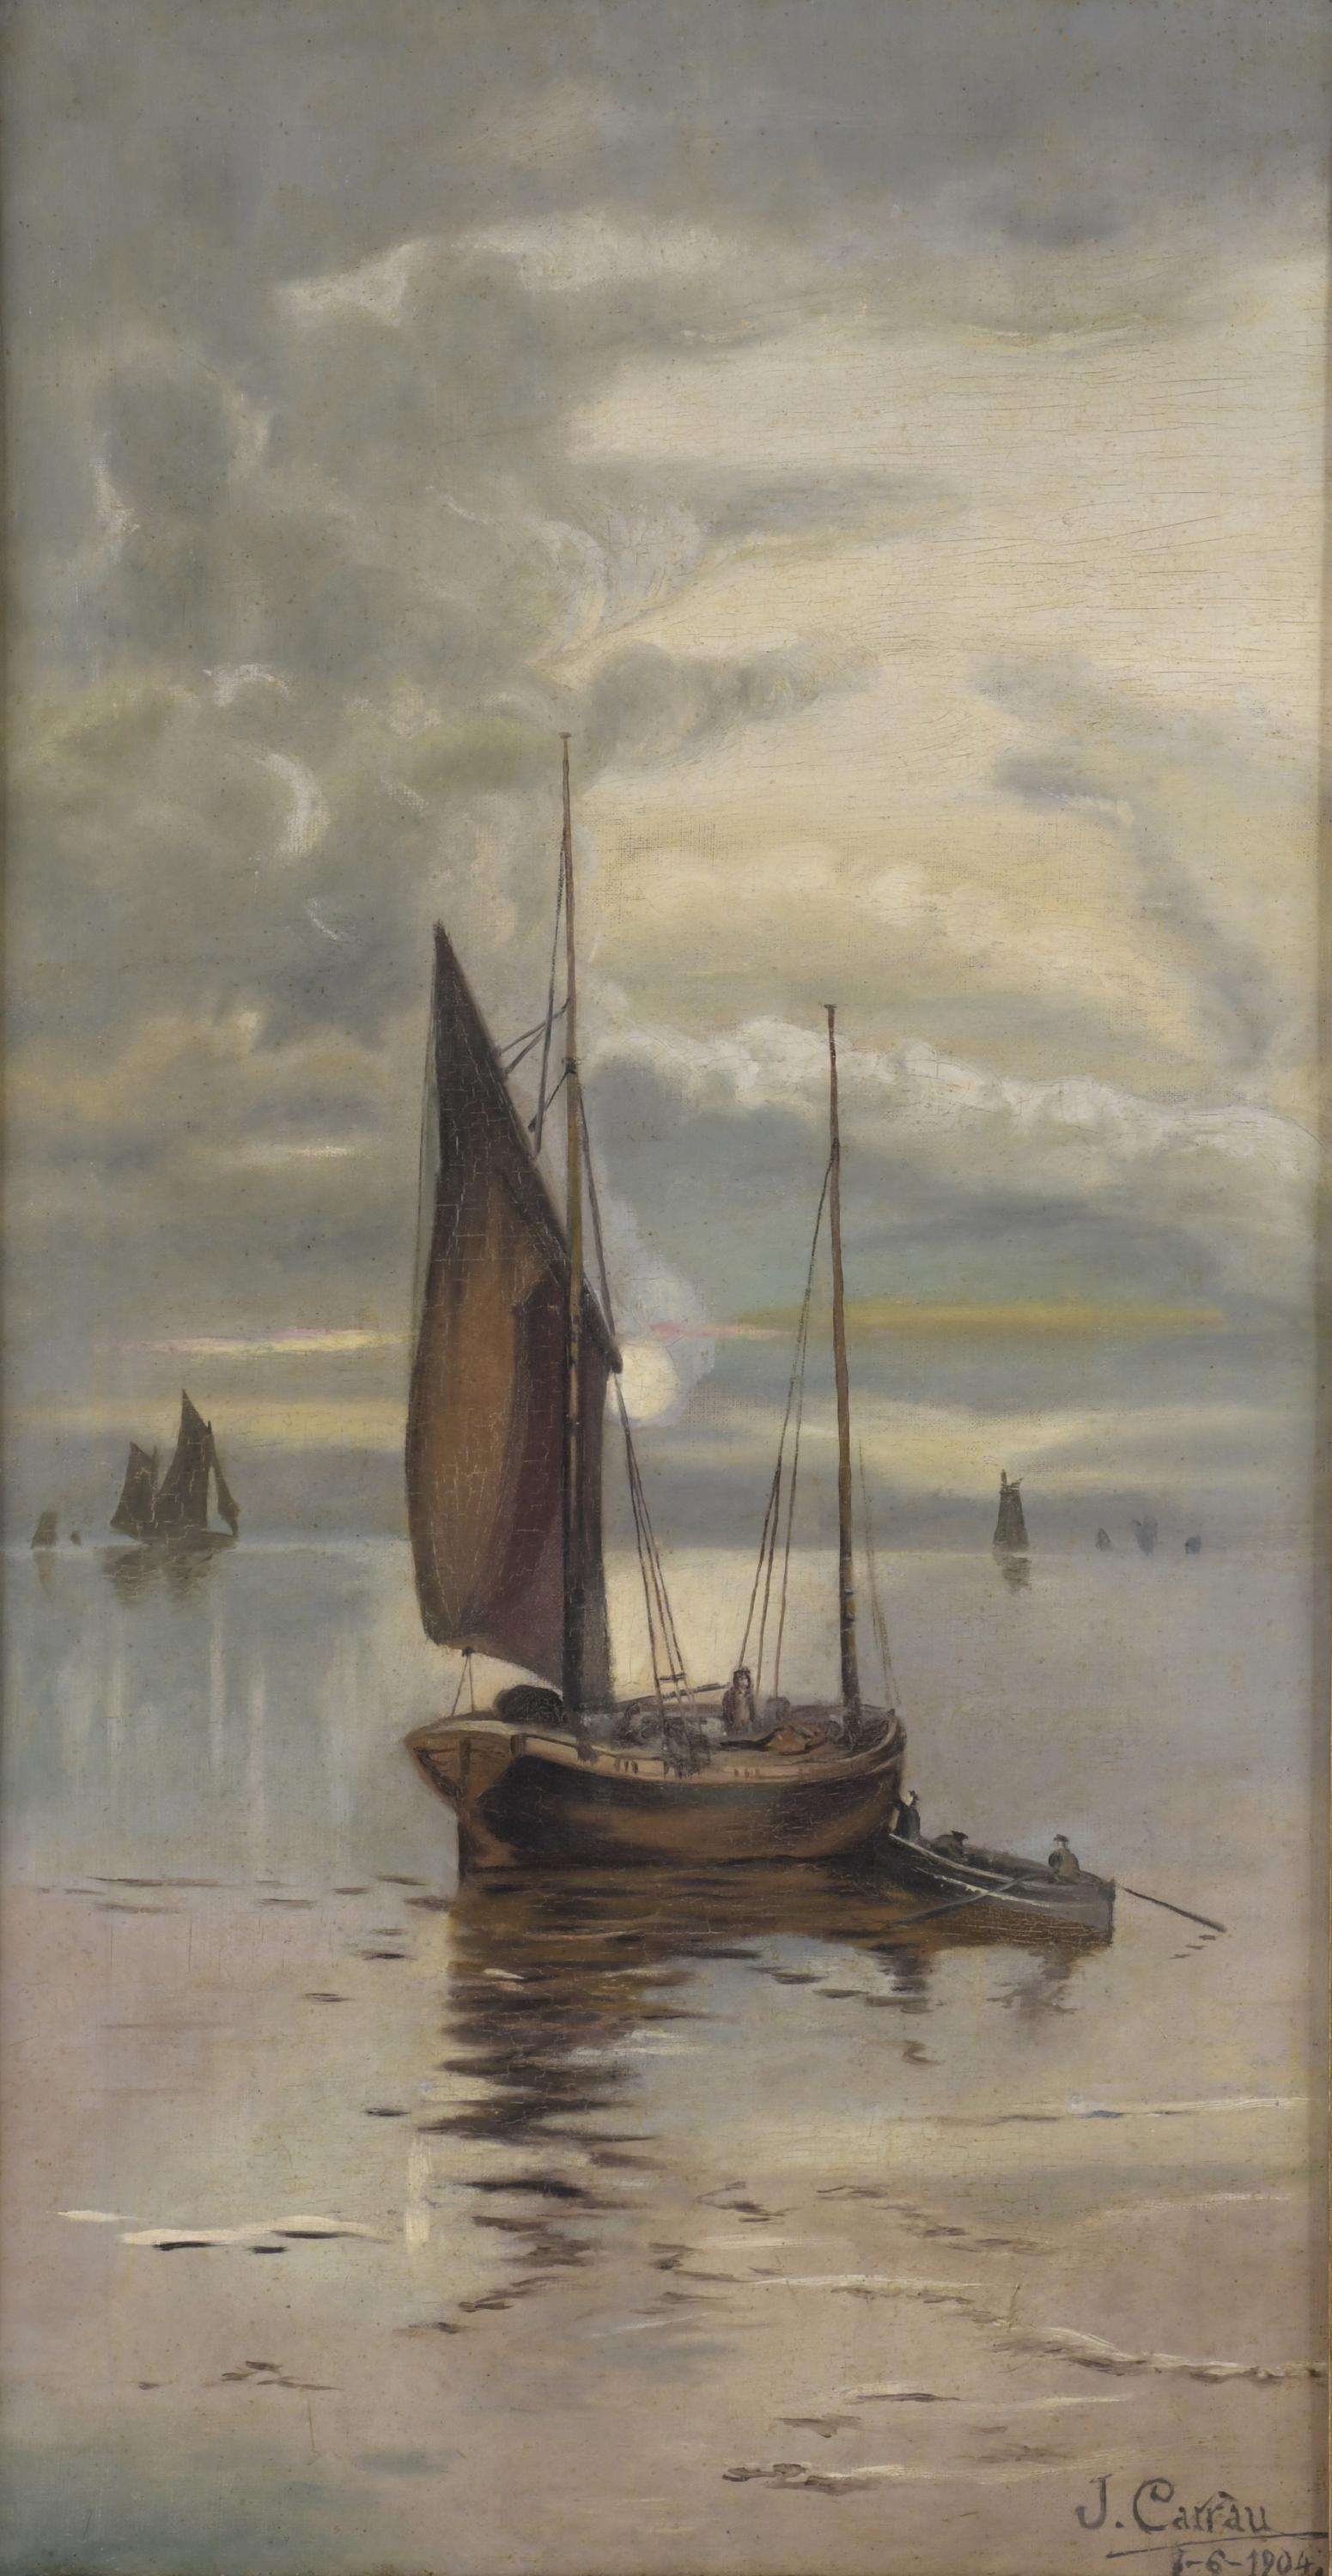 J. CARRAU (XIX-XX). "BARCA EN LA ORILLA", 1904.